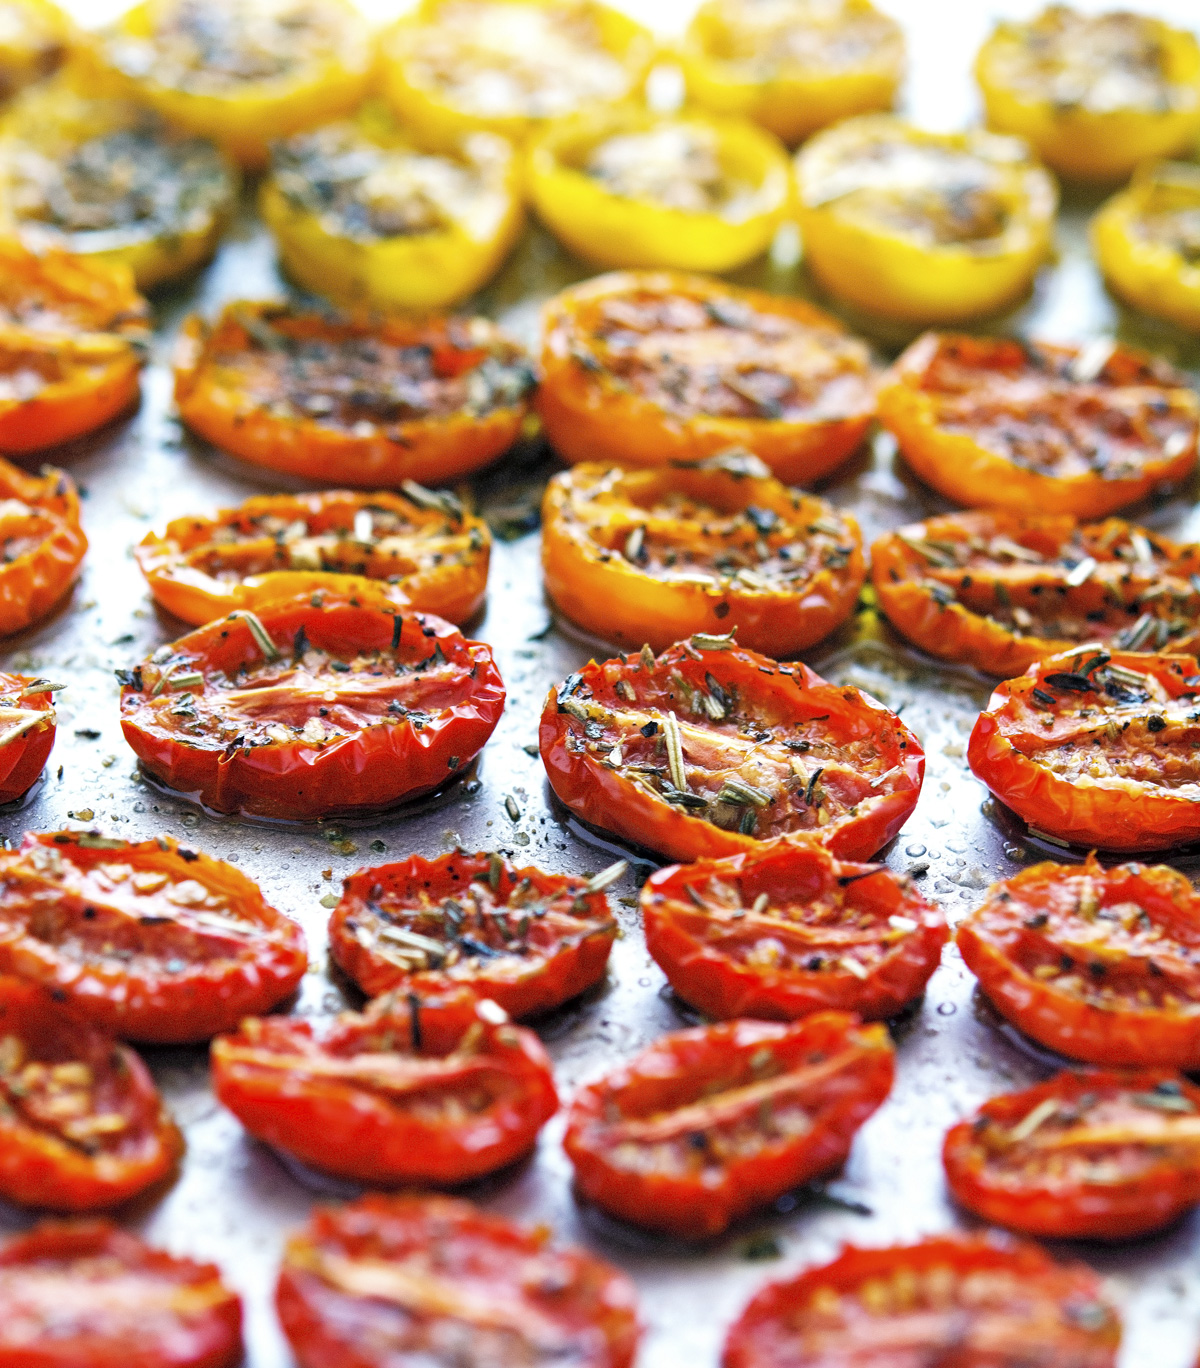 Provencal Slow-Roasted Tomatoes